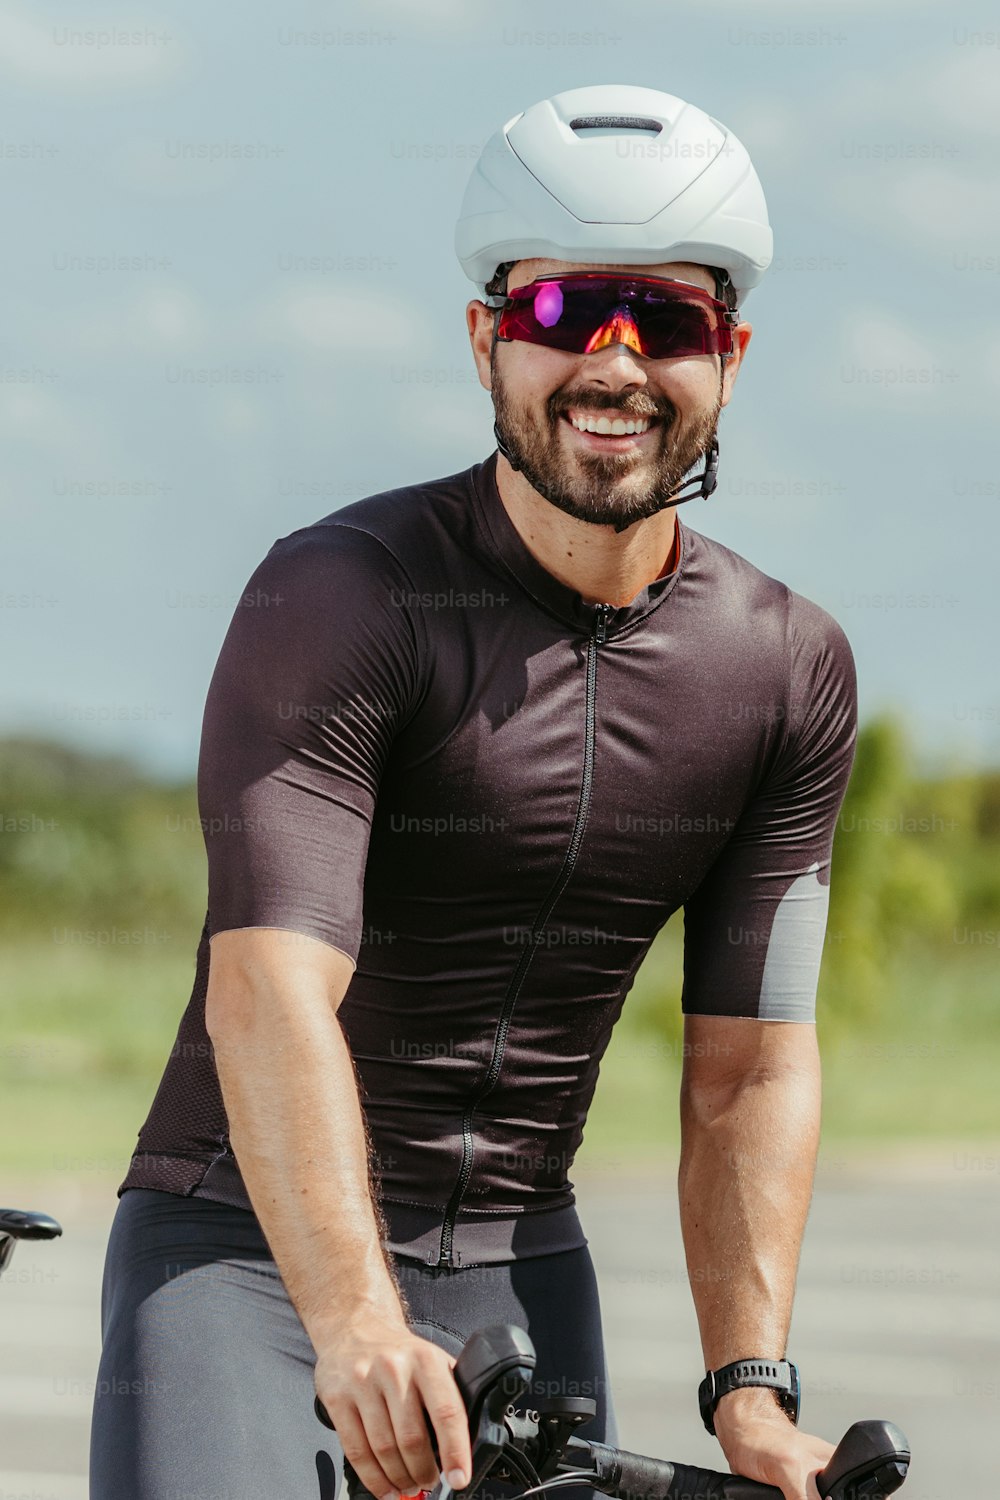 a man wearing a helmet and sunglasses riding a bike